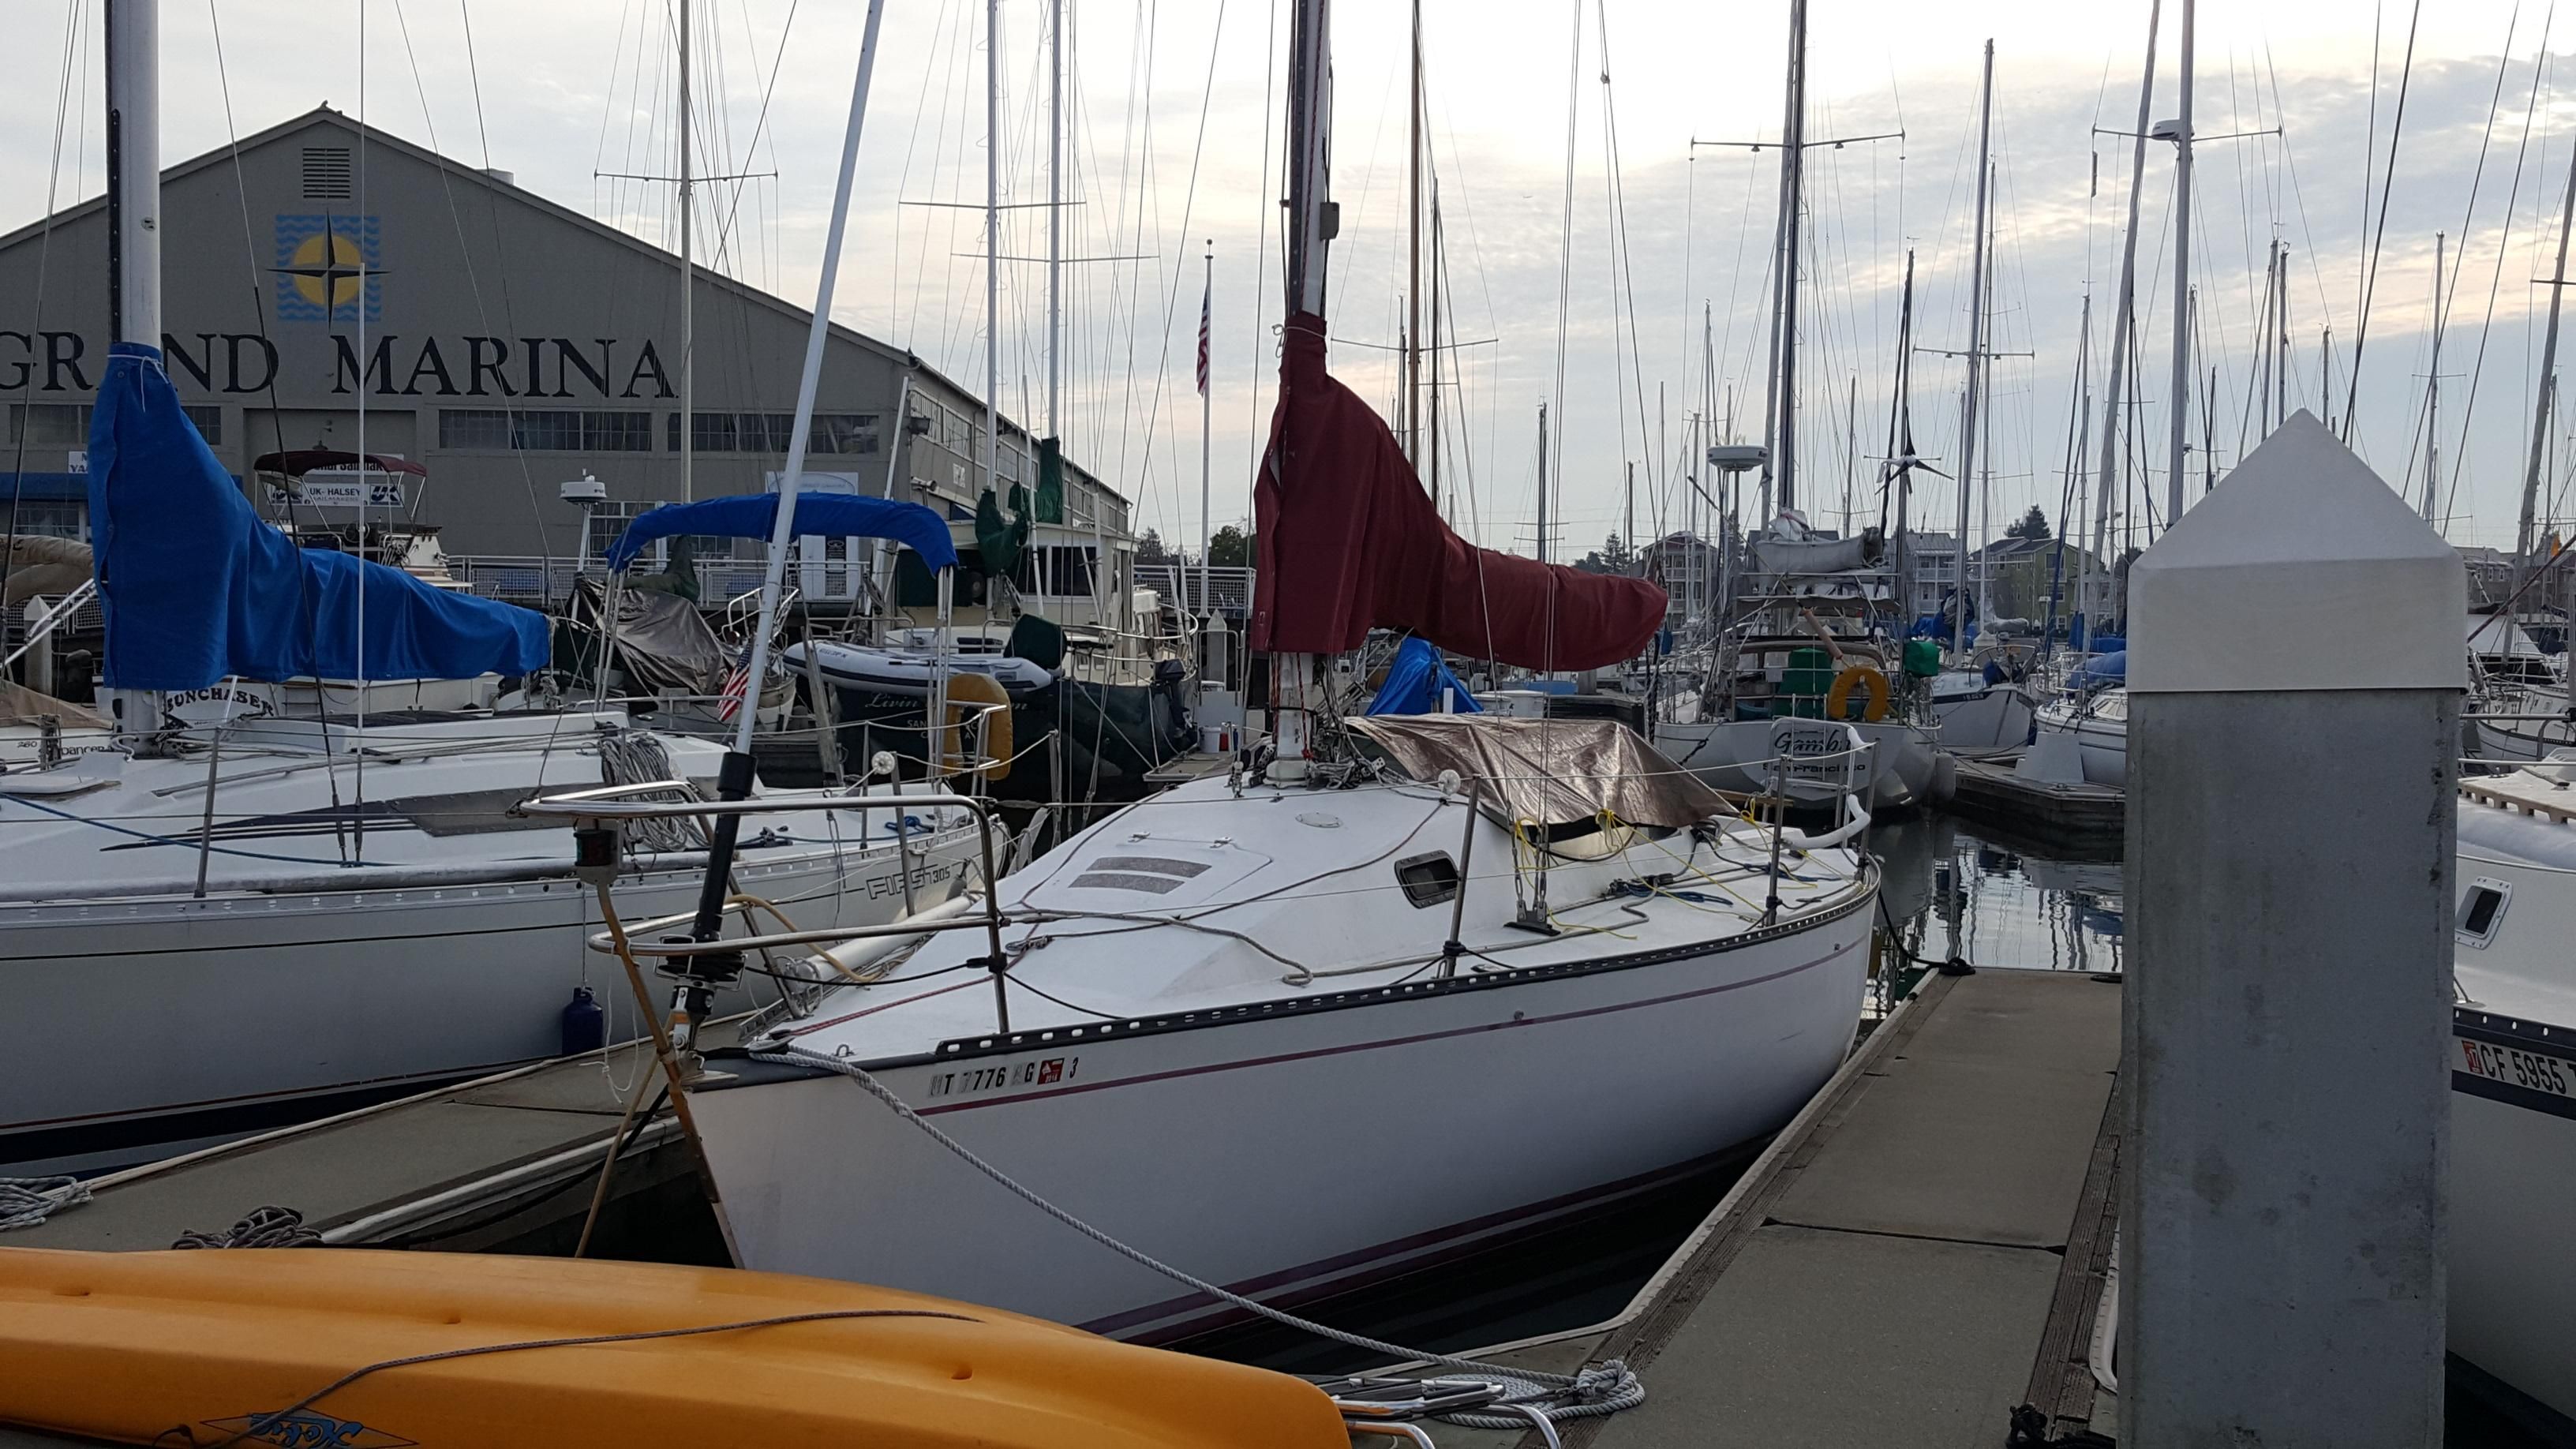 santana 30 sailboat for sale